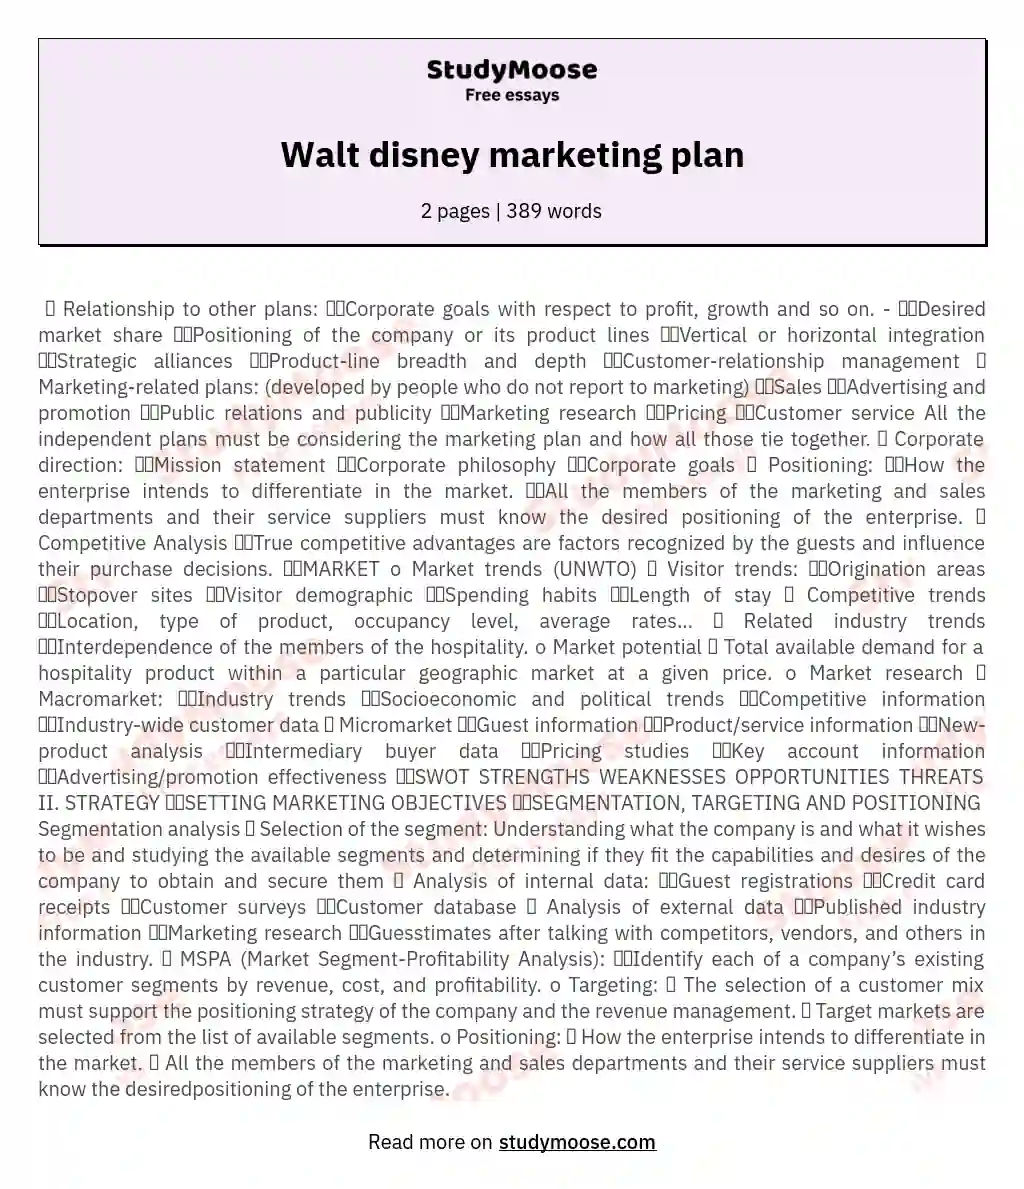 Walt disney marketing plan